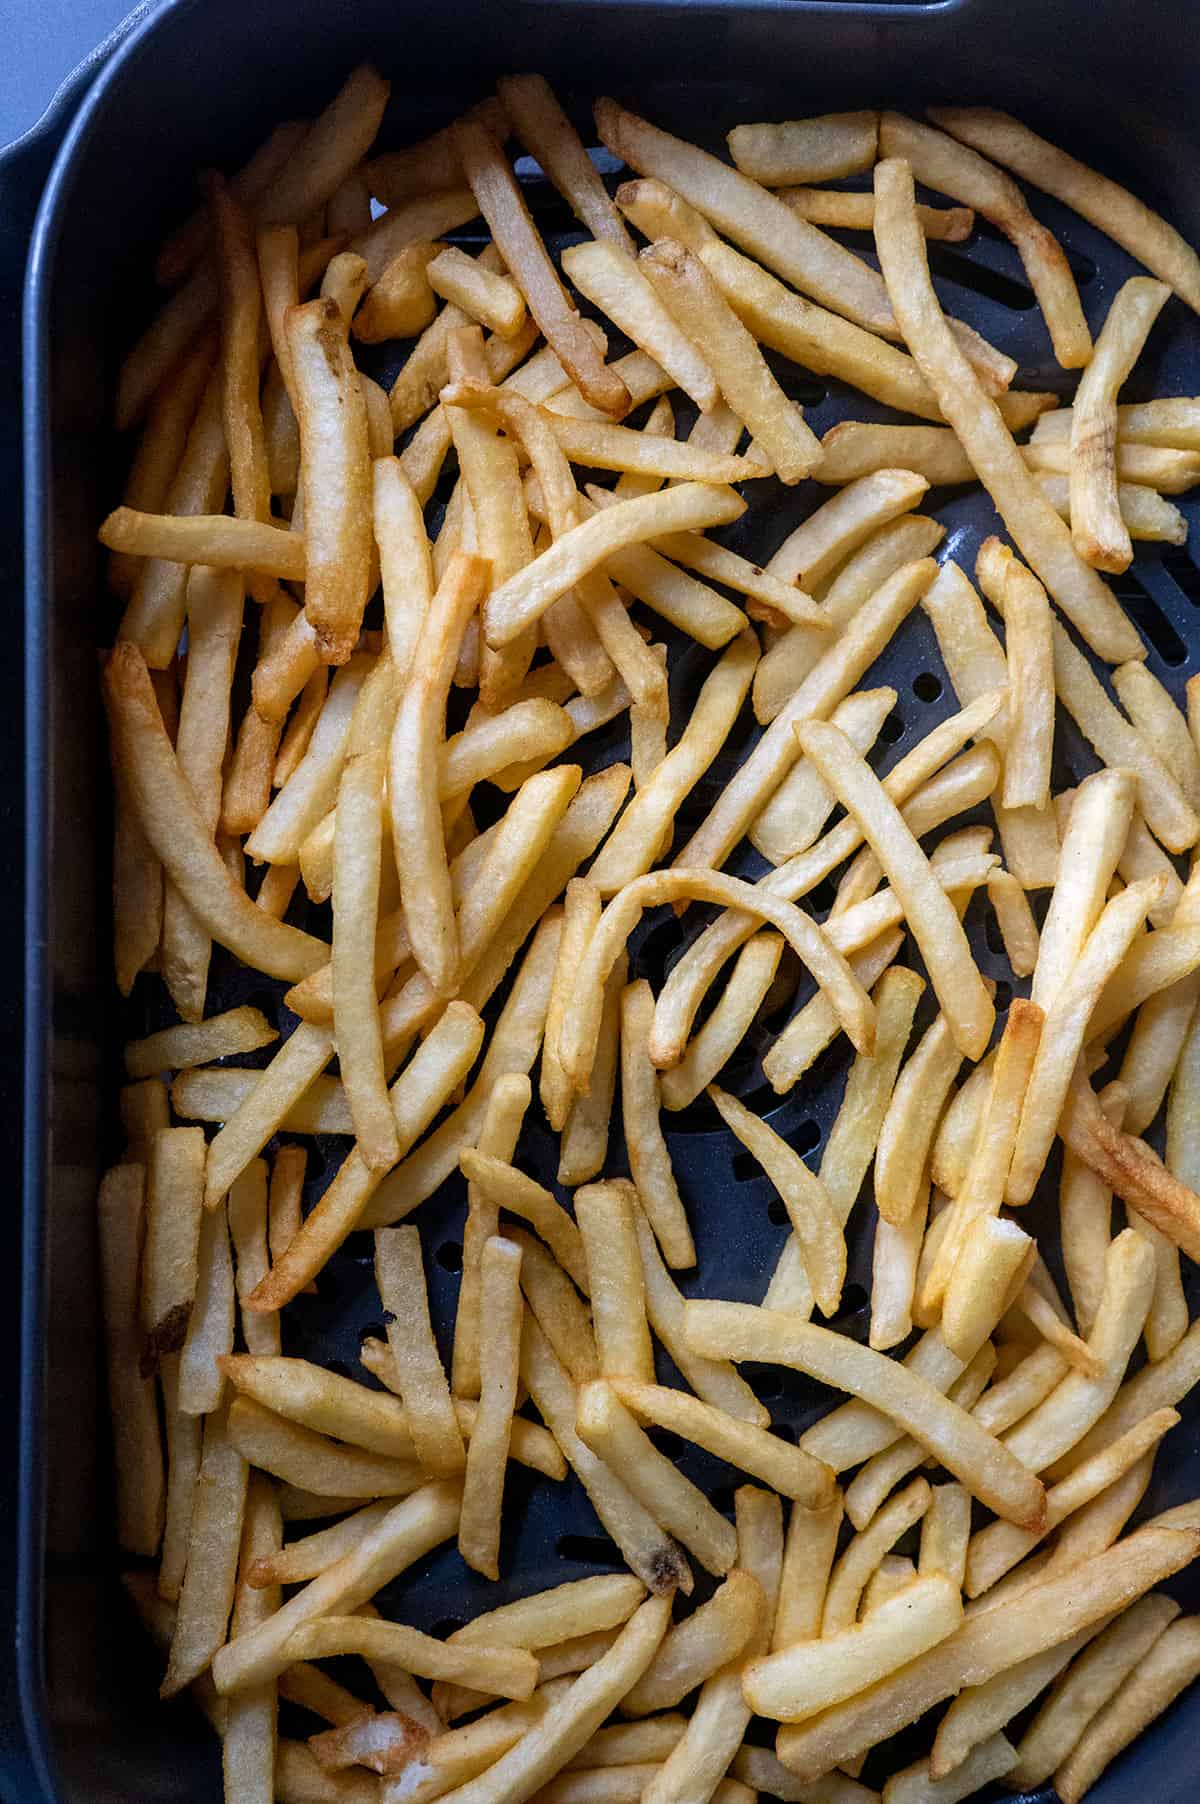 crispy fries in Ninja Grill.